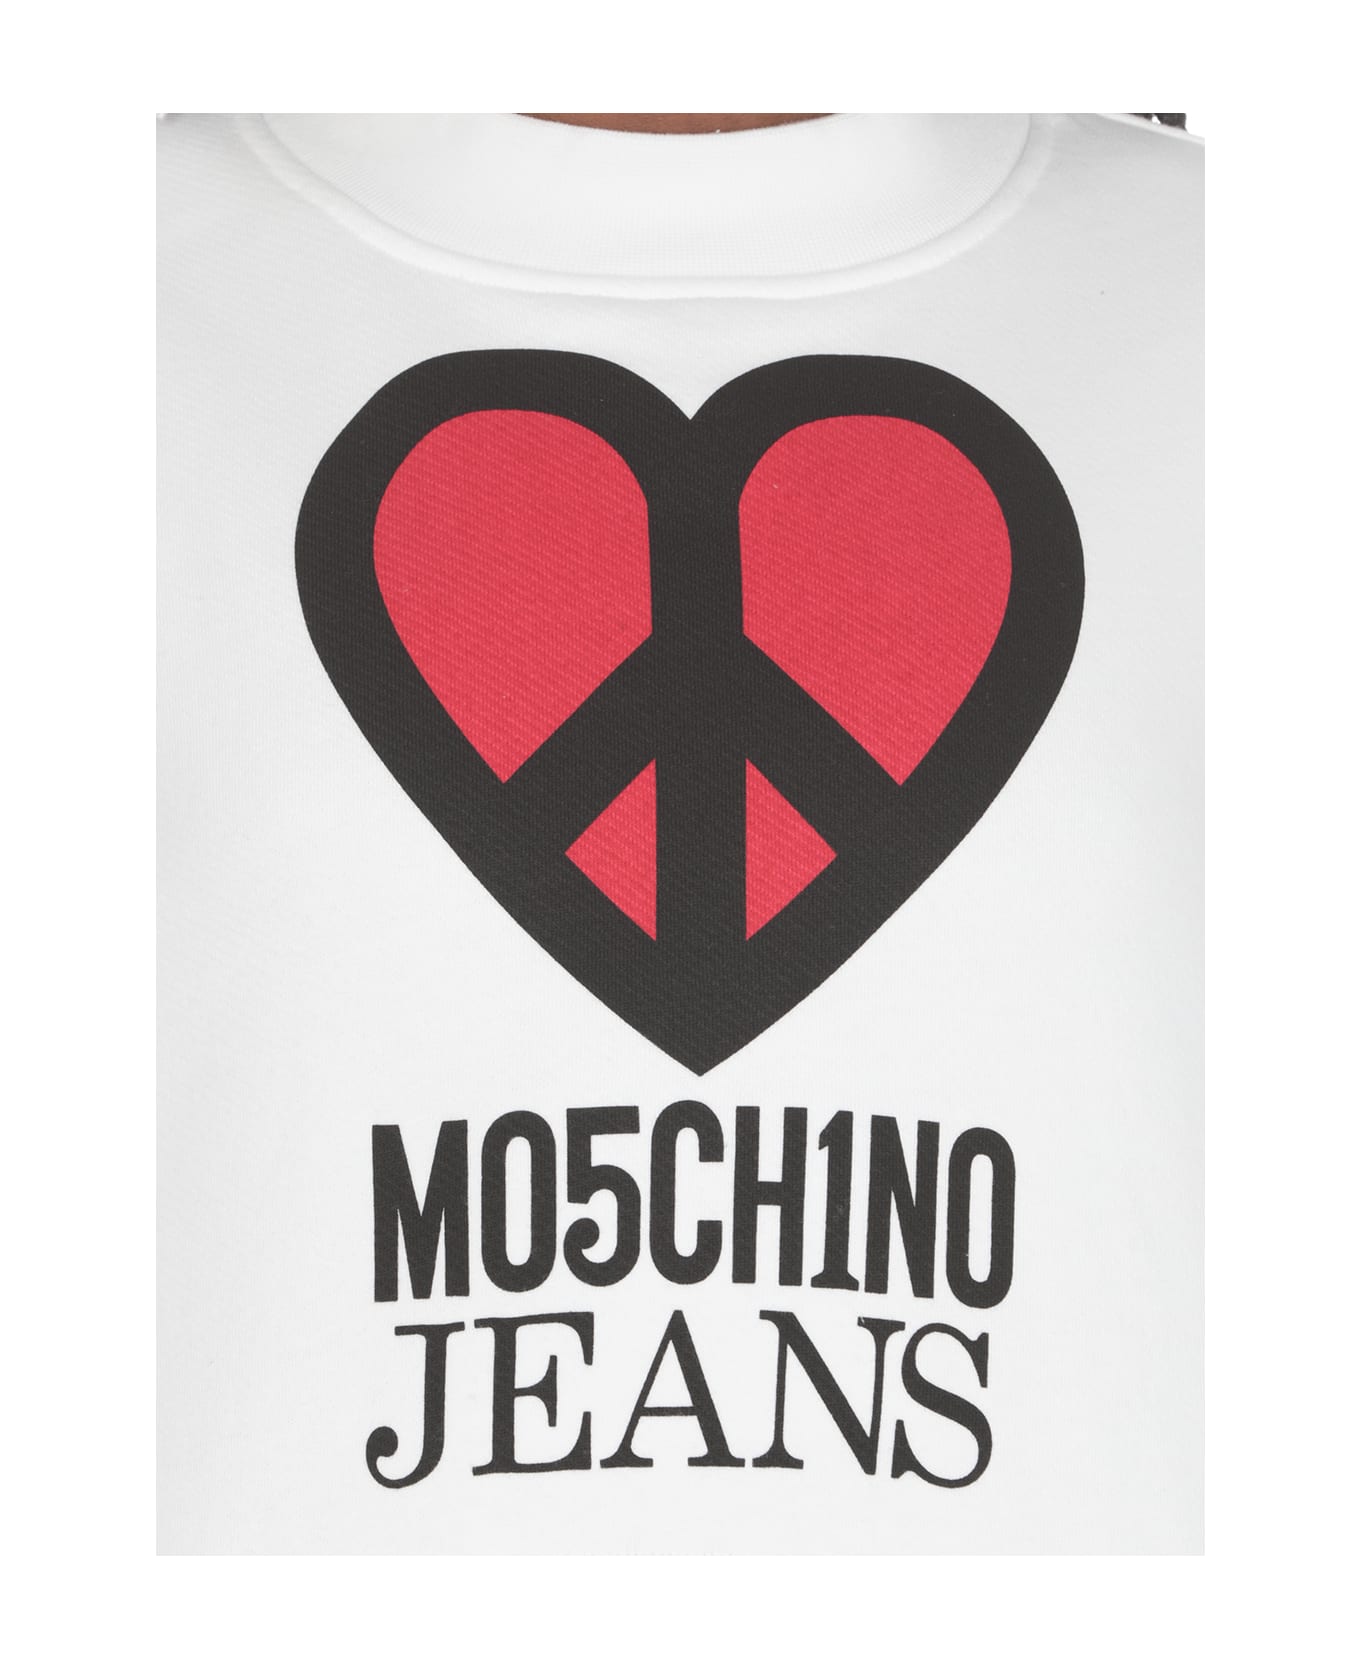 M05CH1N0 Jeans Cotton Sweatshirt - White